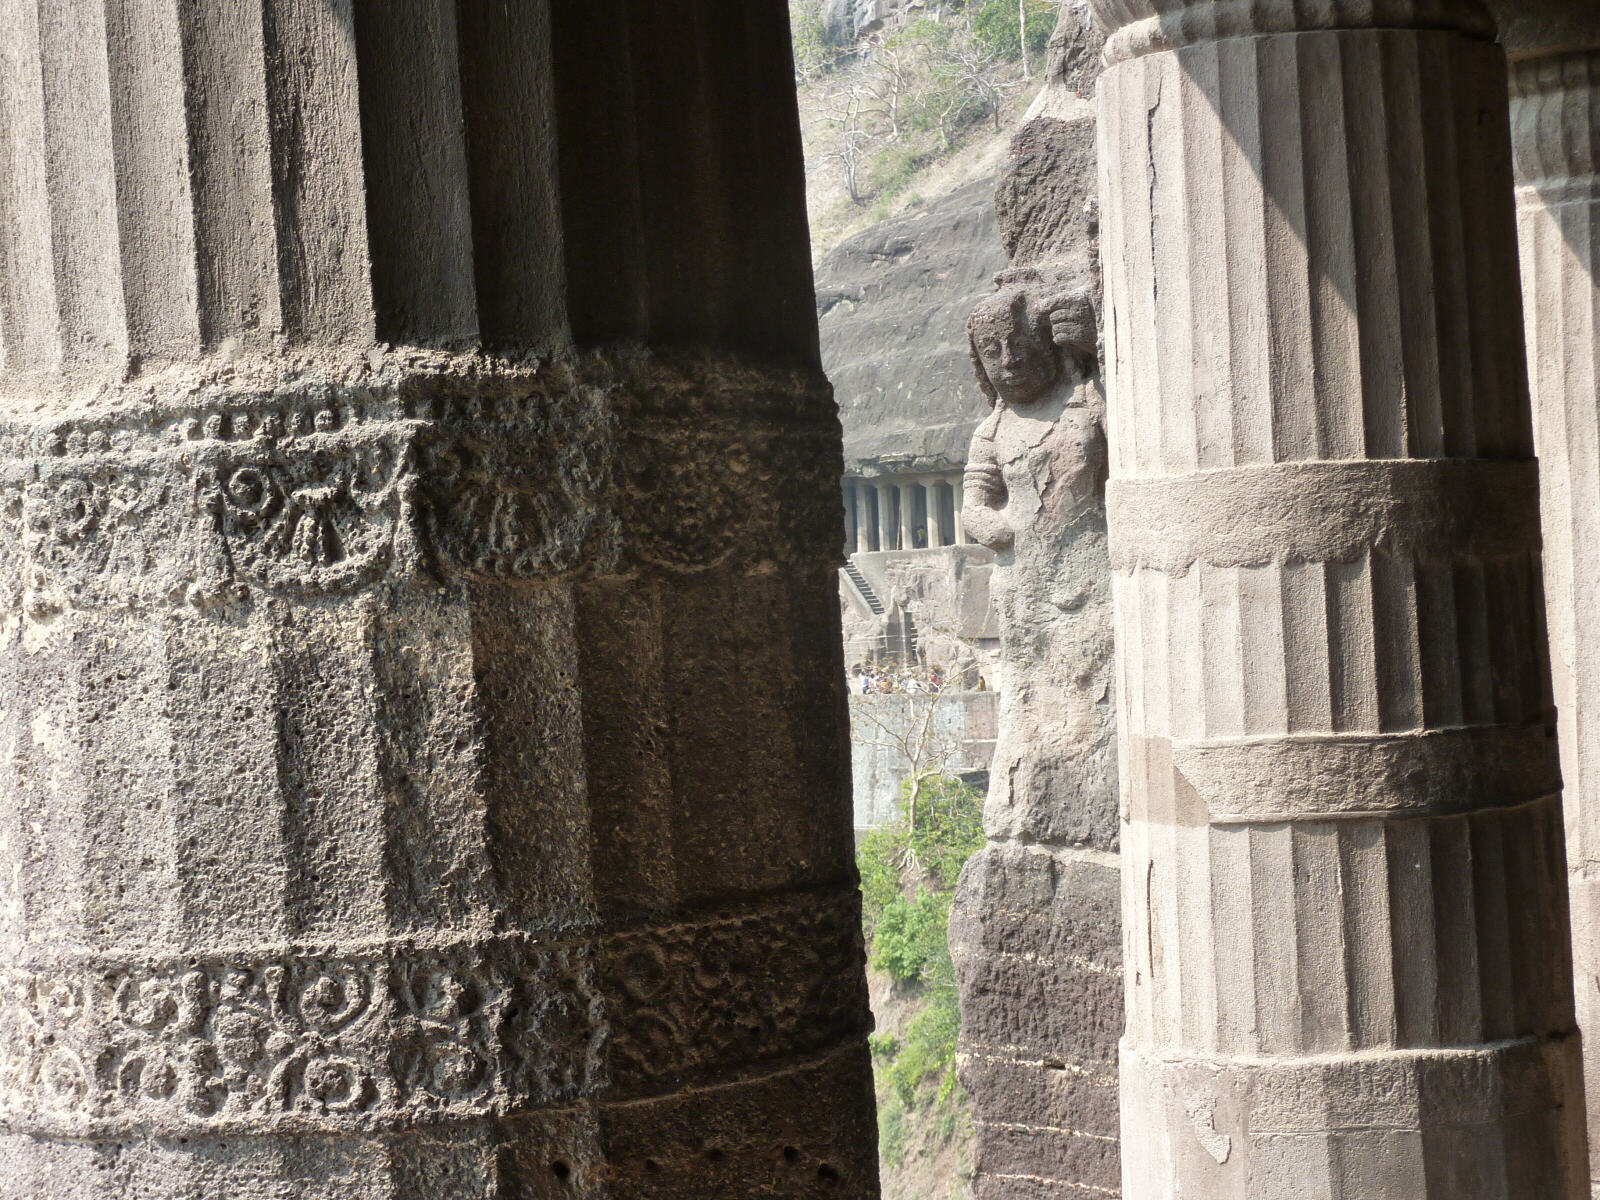 Inside a temple at Ajanta, India